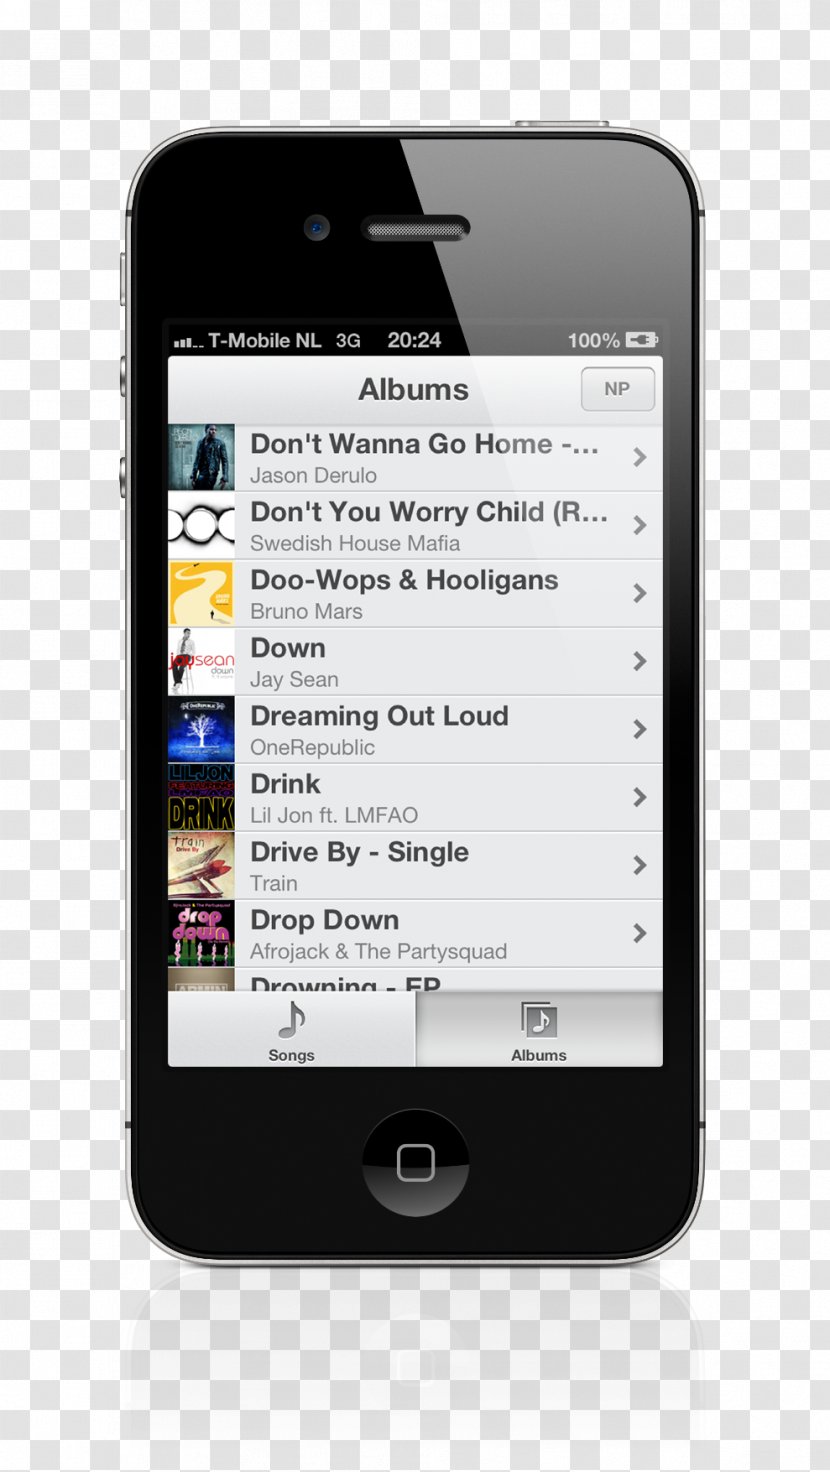 IPhone 4S Apple - App Store Transparent PNG